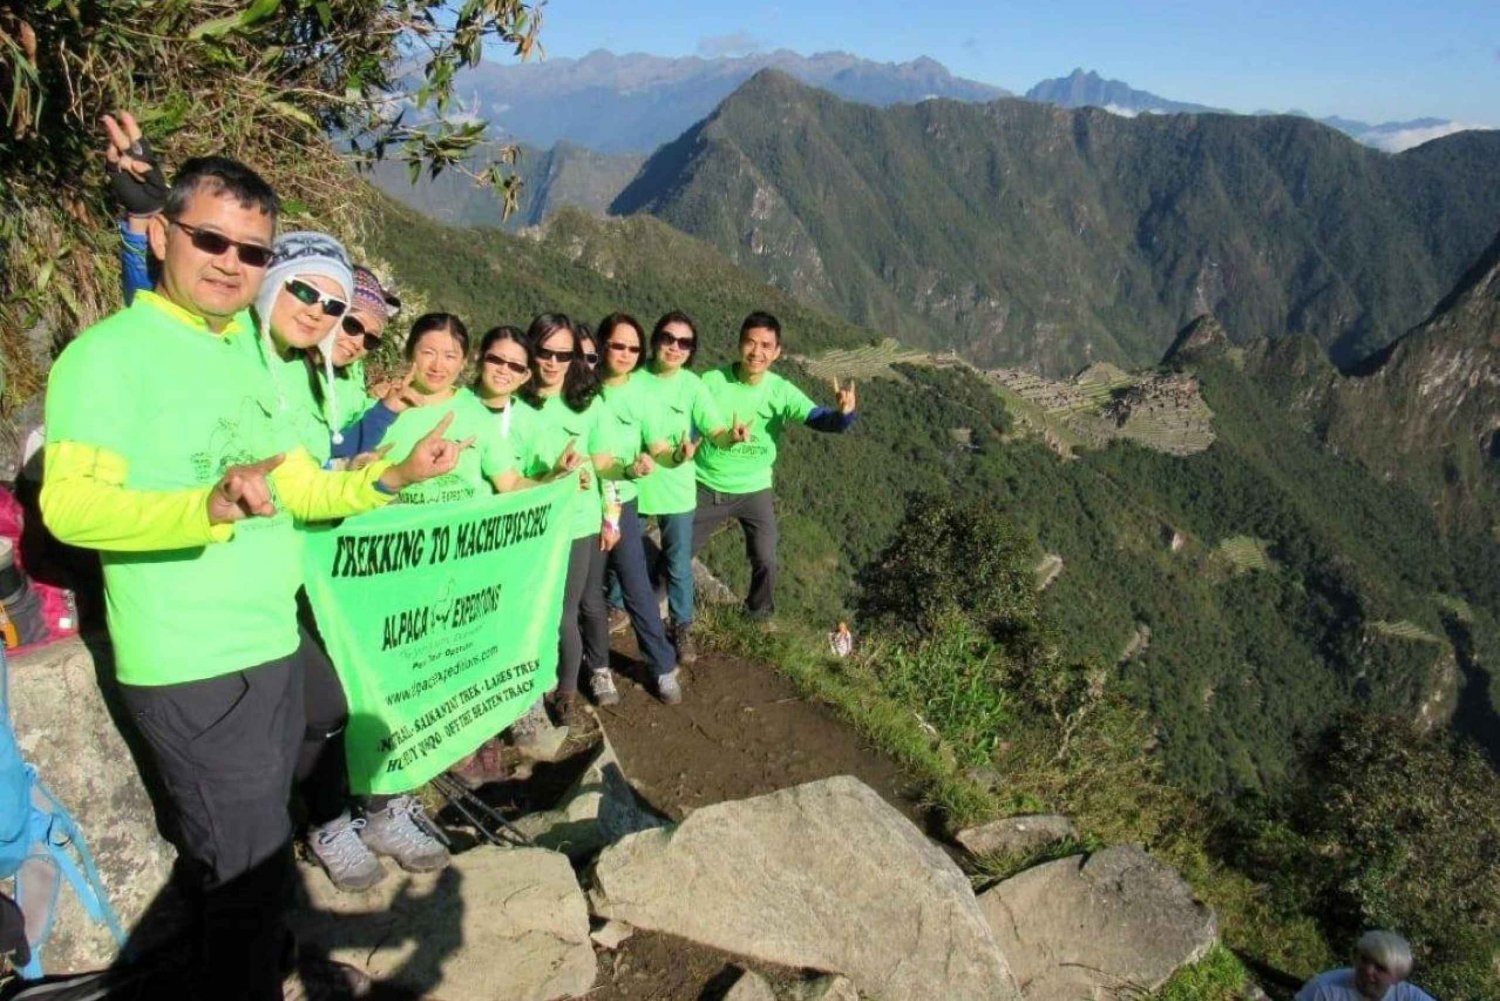 Machu Picchu: Inkastien 2-dages guidet tur med overnatning